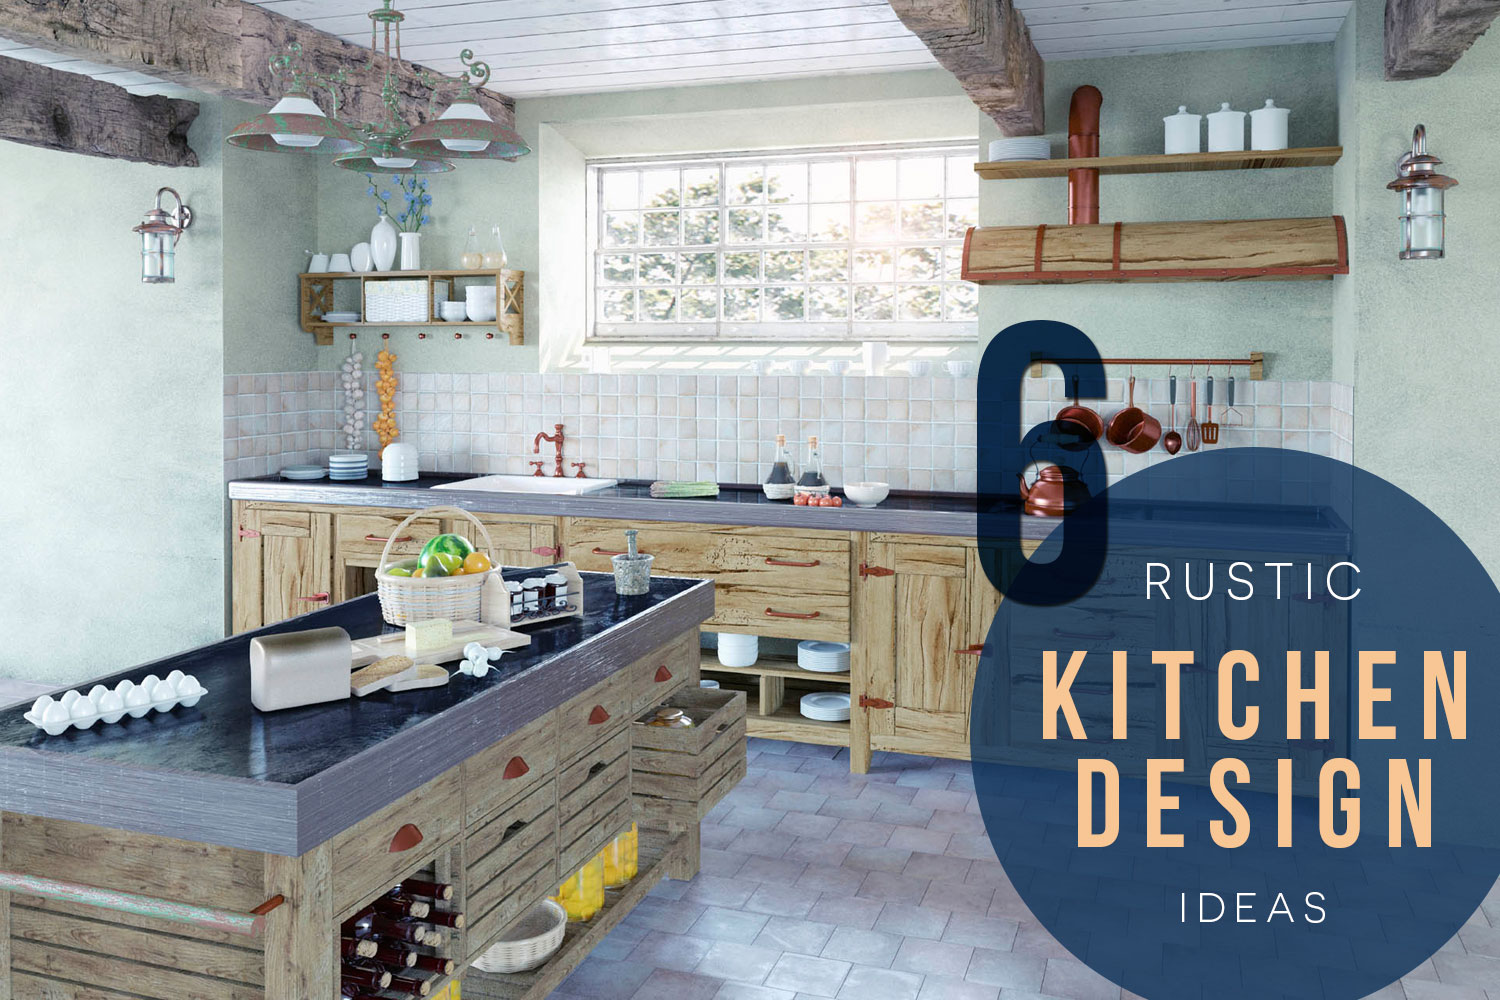 6 Rustic Kitchen Design Ideas